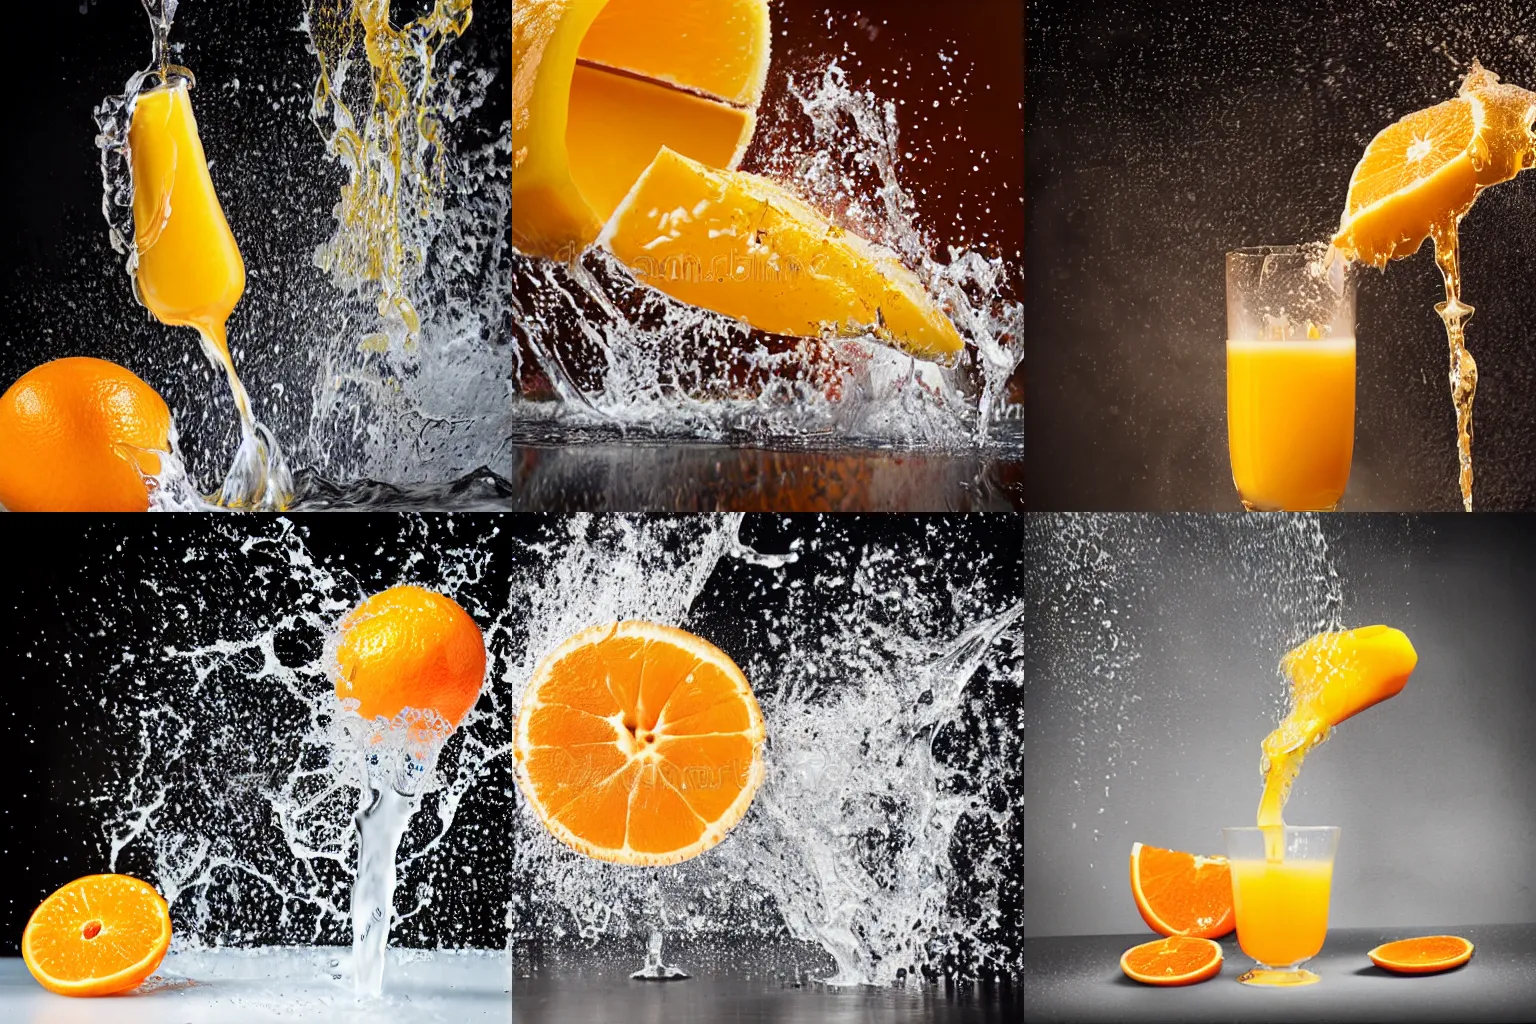 Prompt: splashing orange juice, stock photo, screaming, studio photography